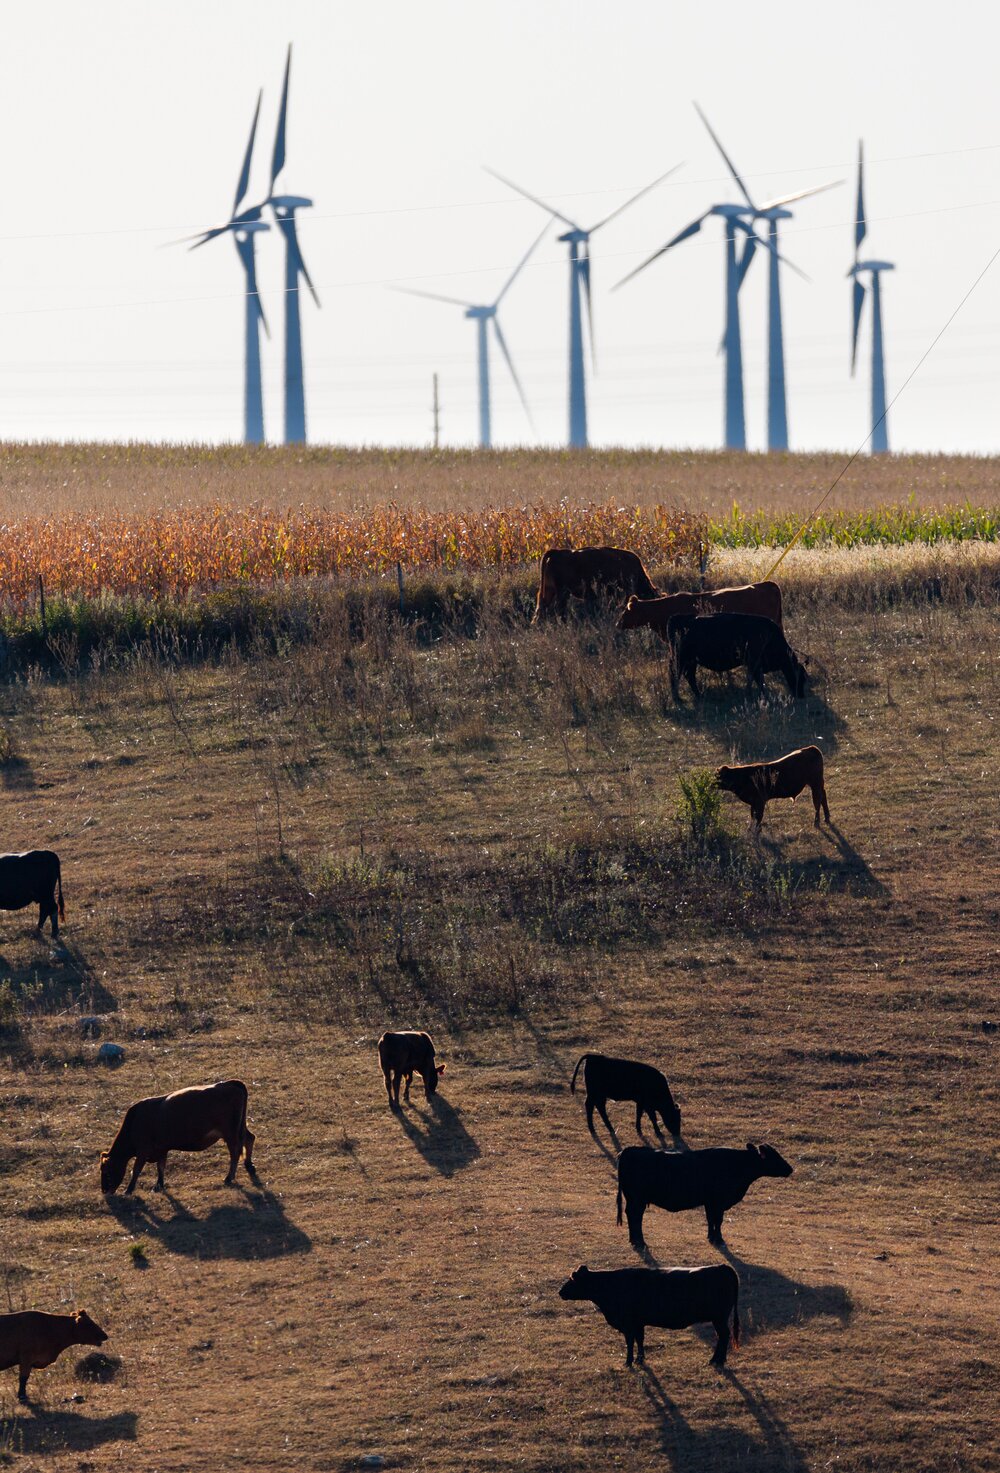 Cattle graze near wind turbines near a TNC preserve in Minnesota. Photo by Richard Hamilton Smith.